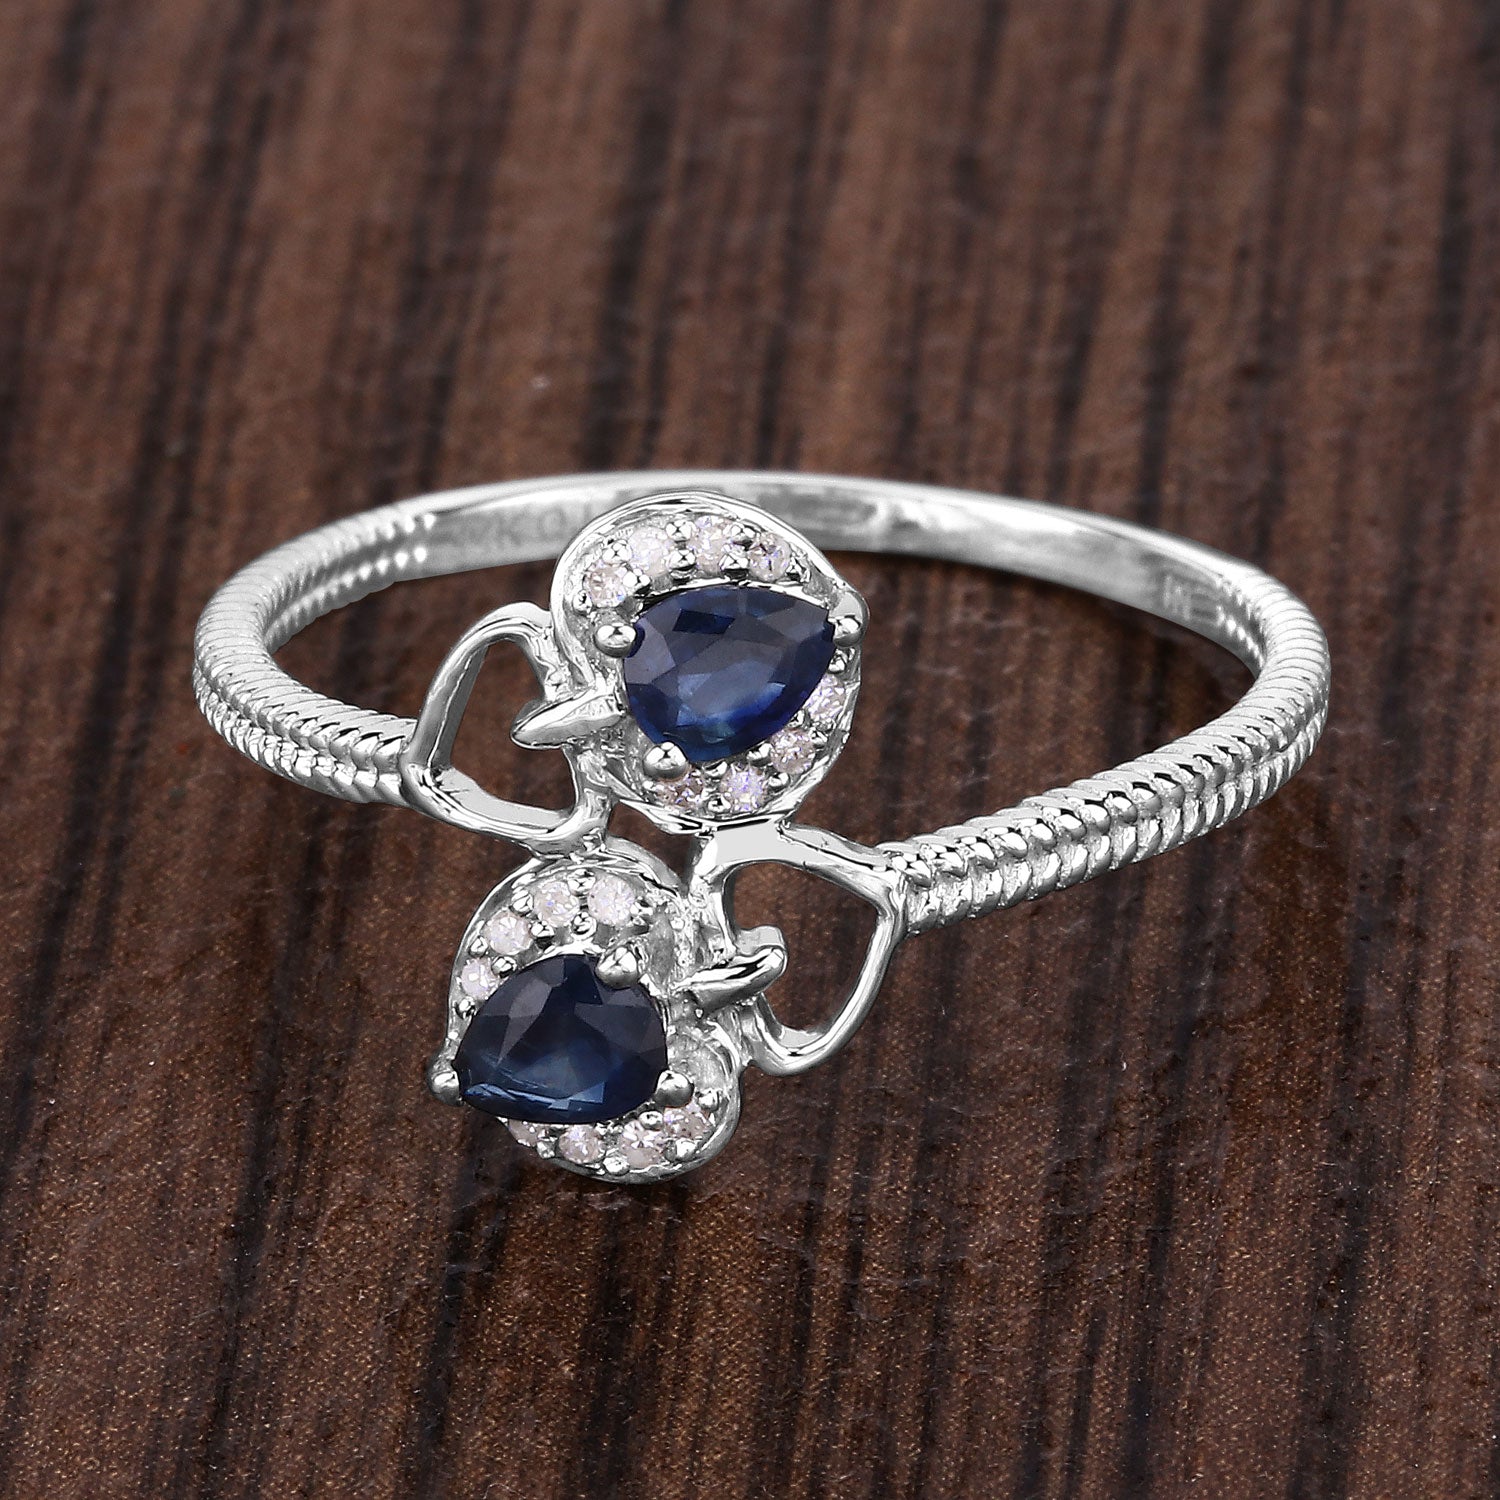 0.34 Carat Genuine Blue Sapphire and White Diamond 14K White Gold Ring